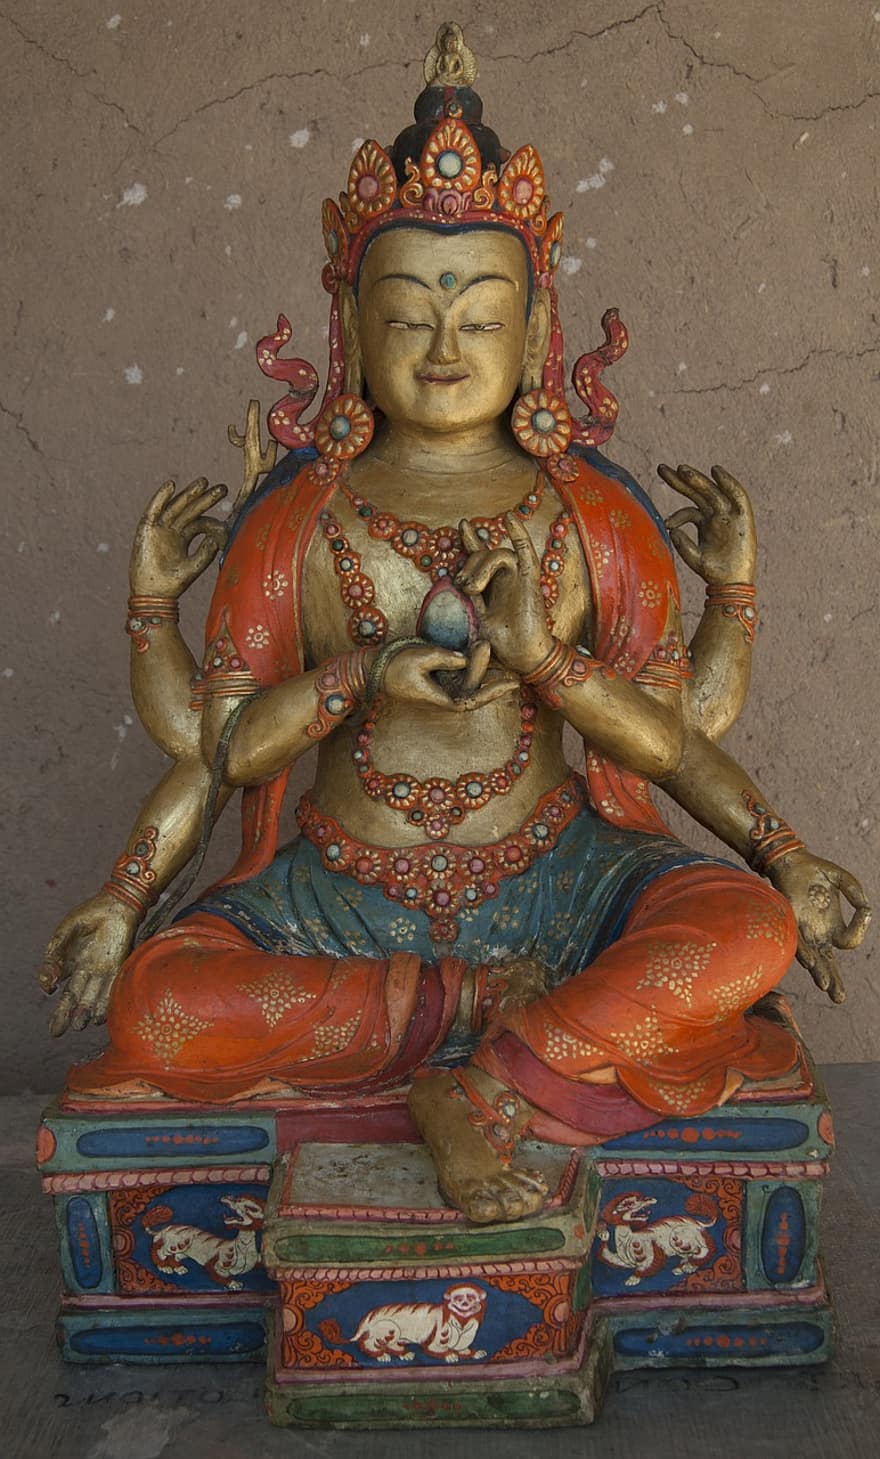 बौद्ध पेंटिंग, बुद्ध धर्म, बुद्धिवादी कला, मूर्ति, धर्म, संस्कृतियों, प्रतिमा, आध्यात्मिकता, हिन्दू धर्म, परमेश्वर, प्रसिद्ध स्थल